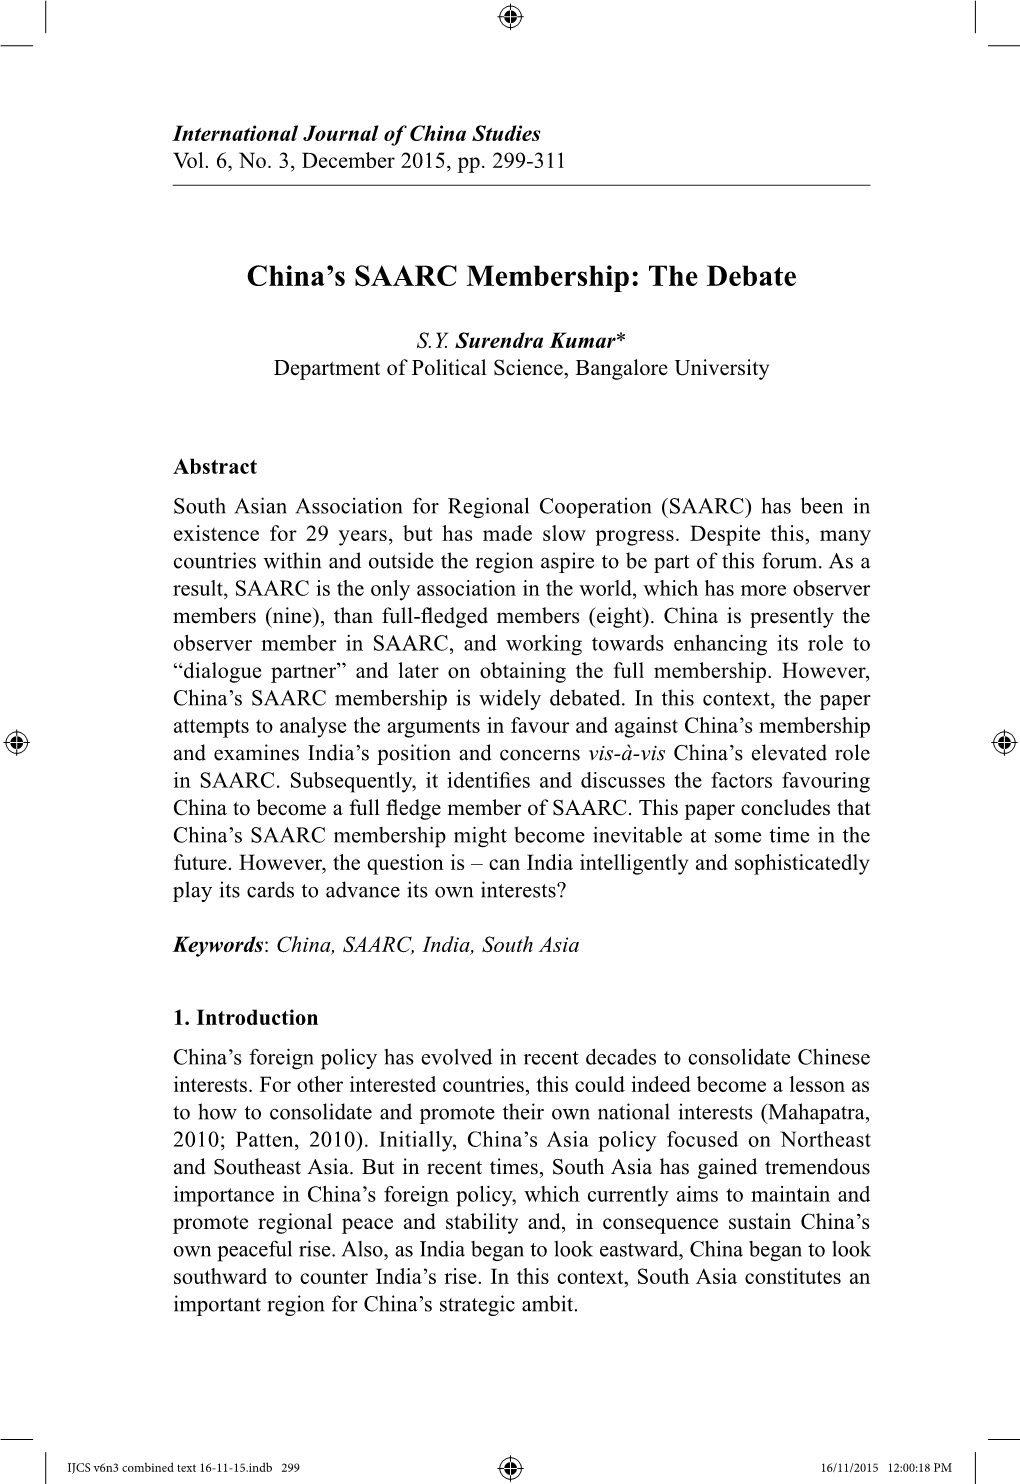 China's SAARC Membership: the Debate